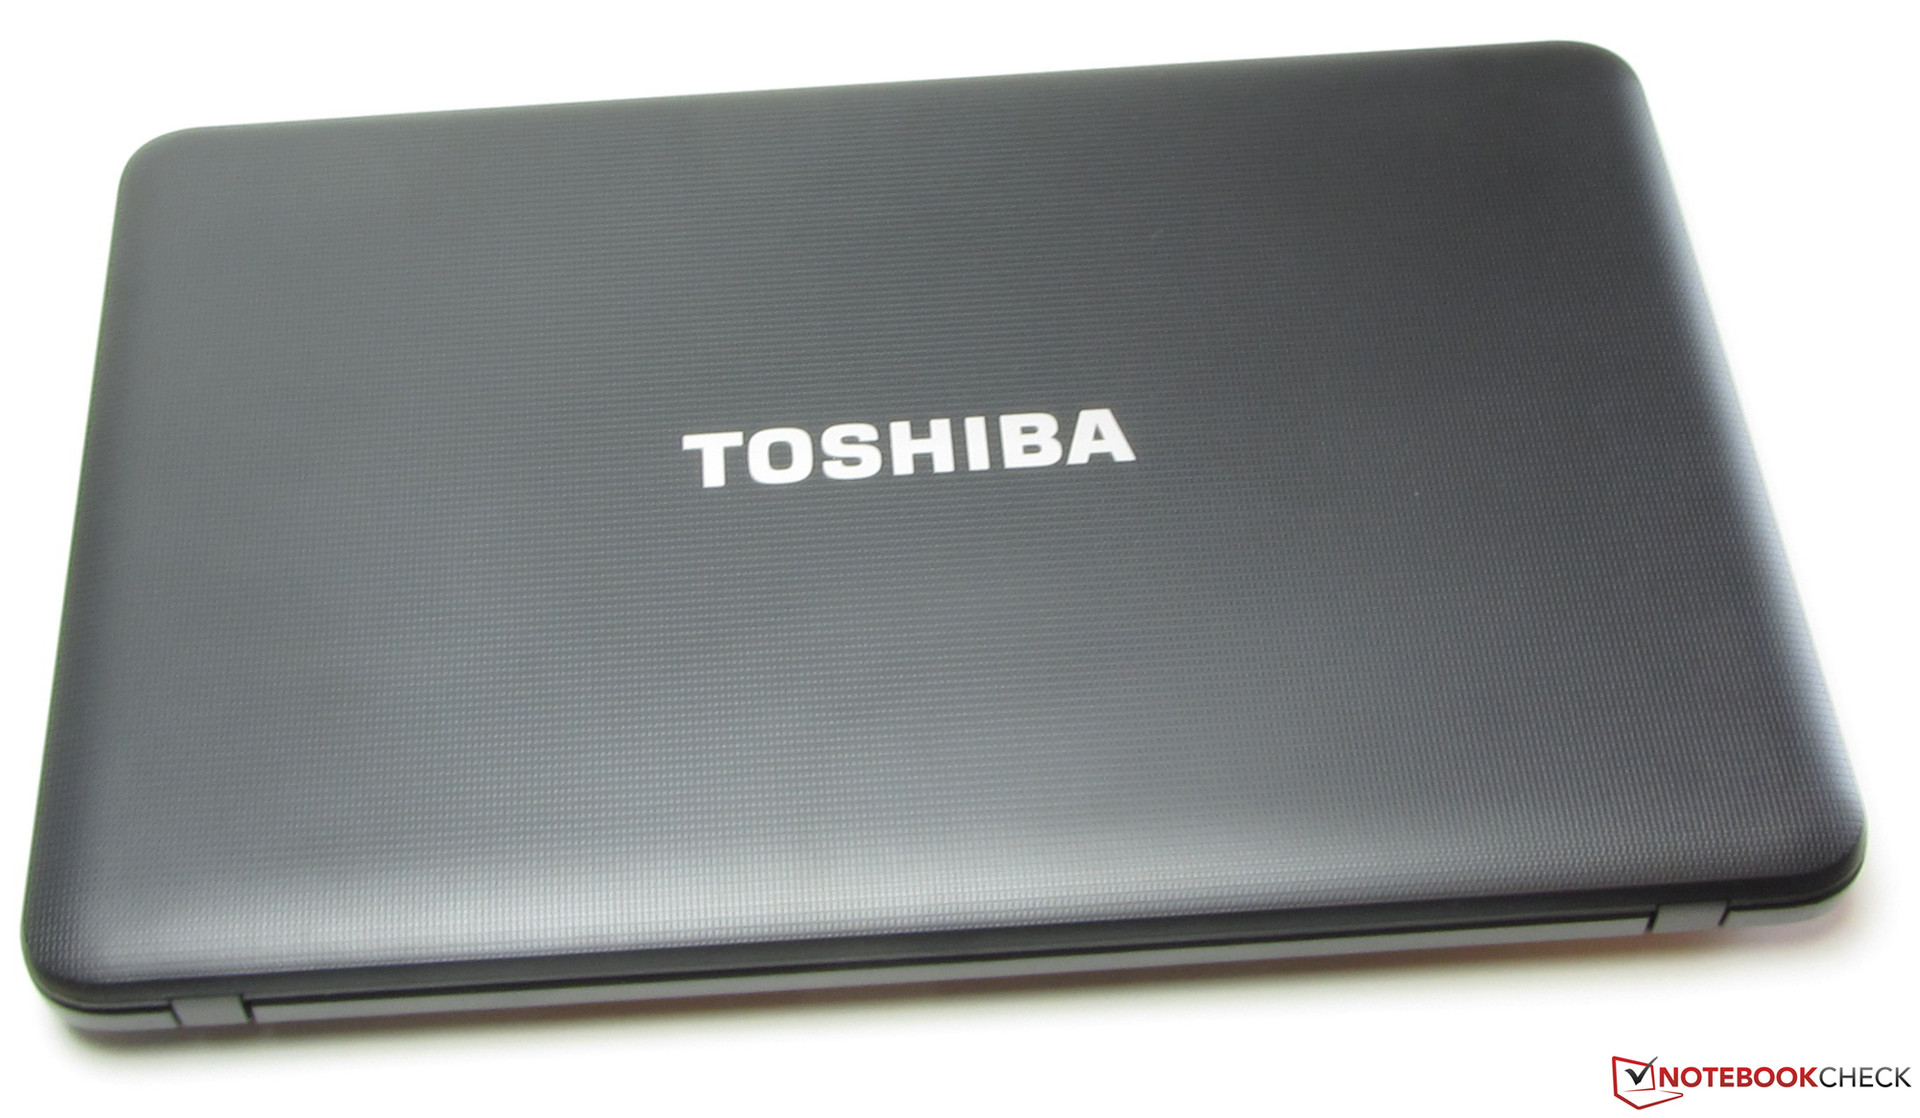 Toshiba satellite pro c850 drivers for windows 7 32-bit